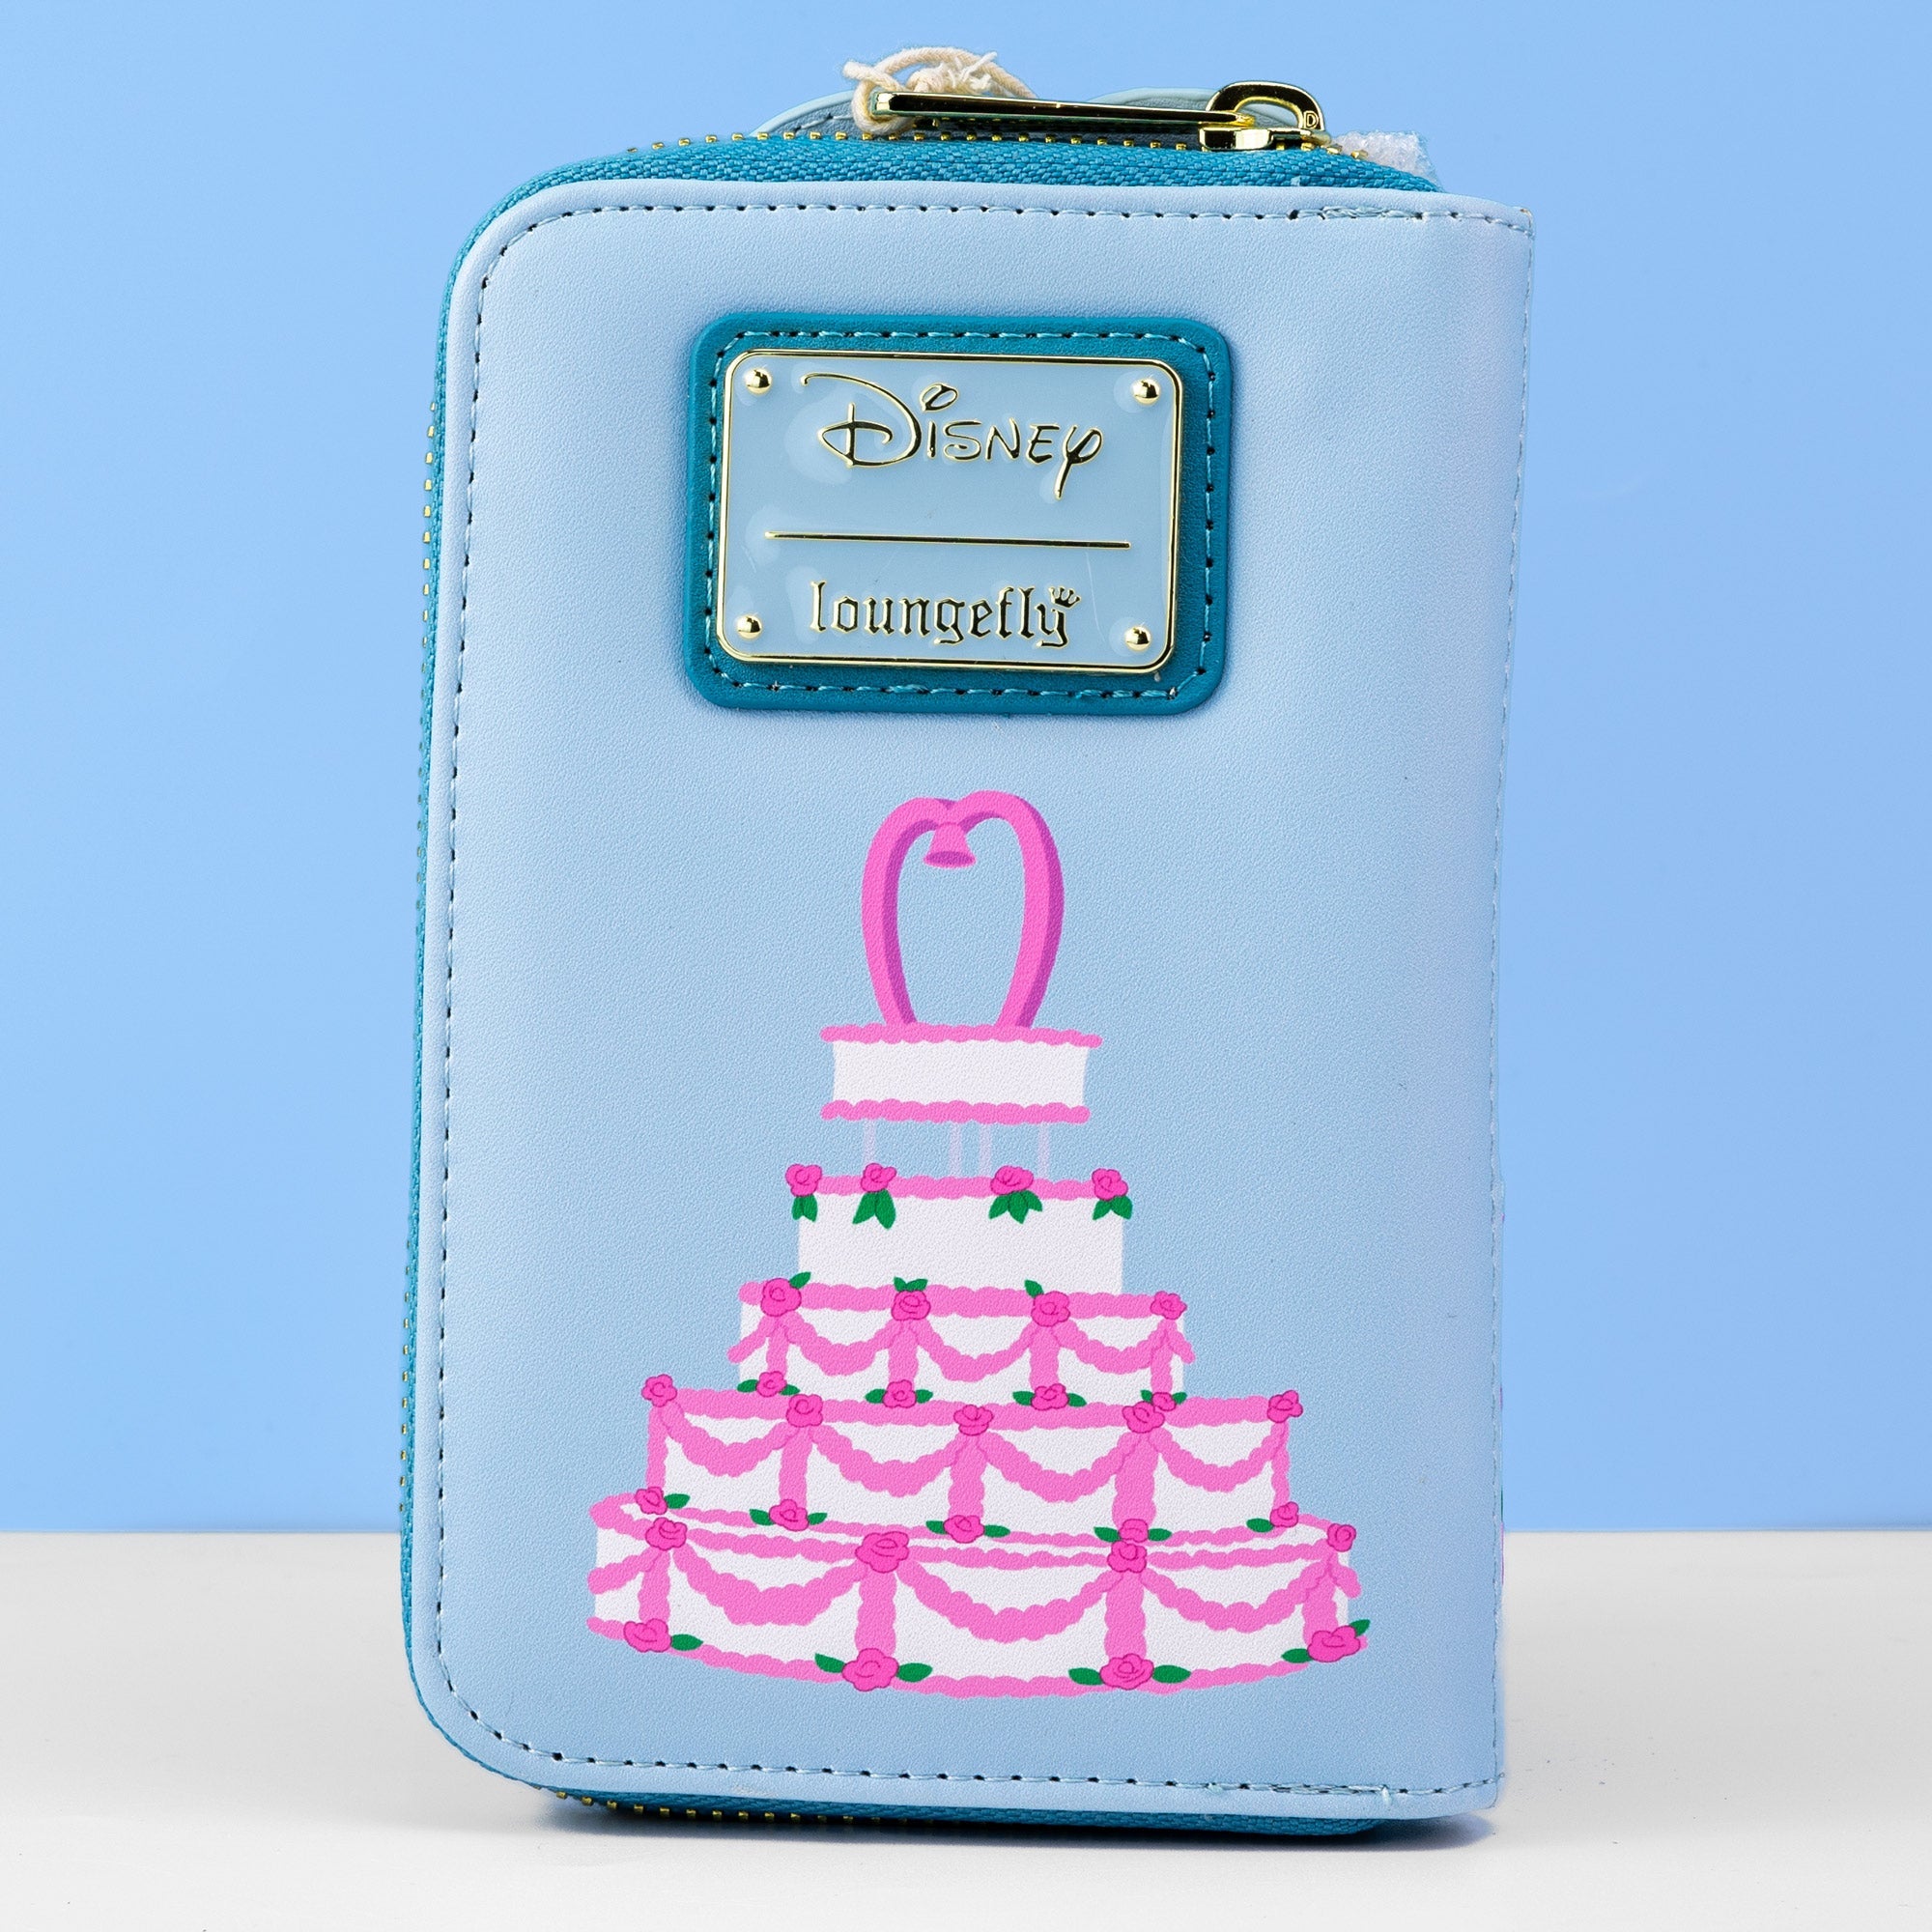 Loungefly x Disney The Little Mermaid Wedding Cake Purse - GeekCore